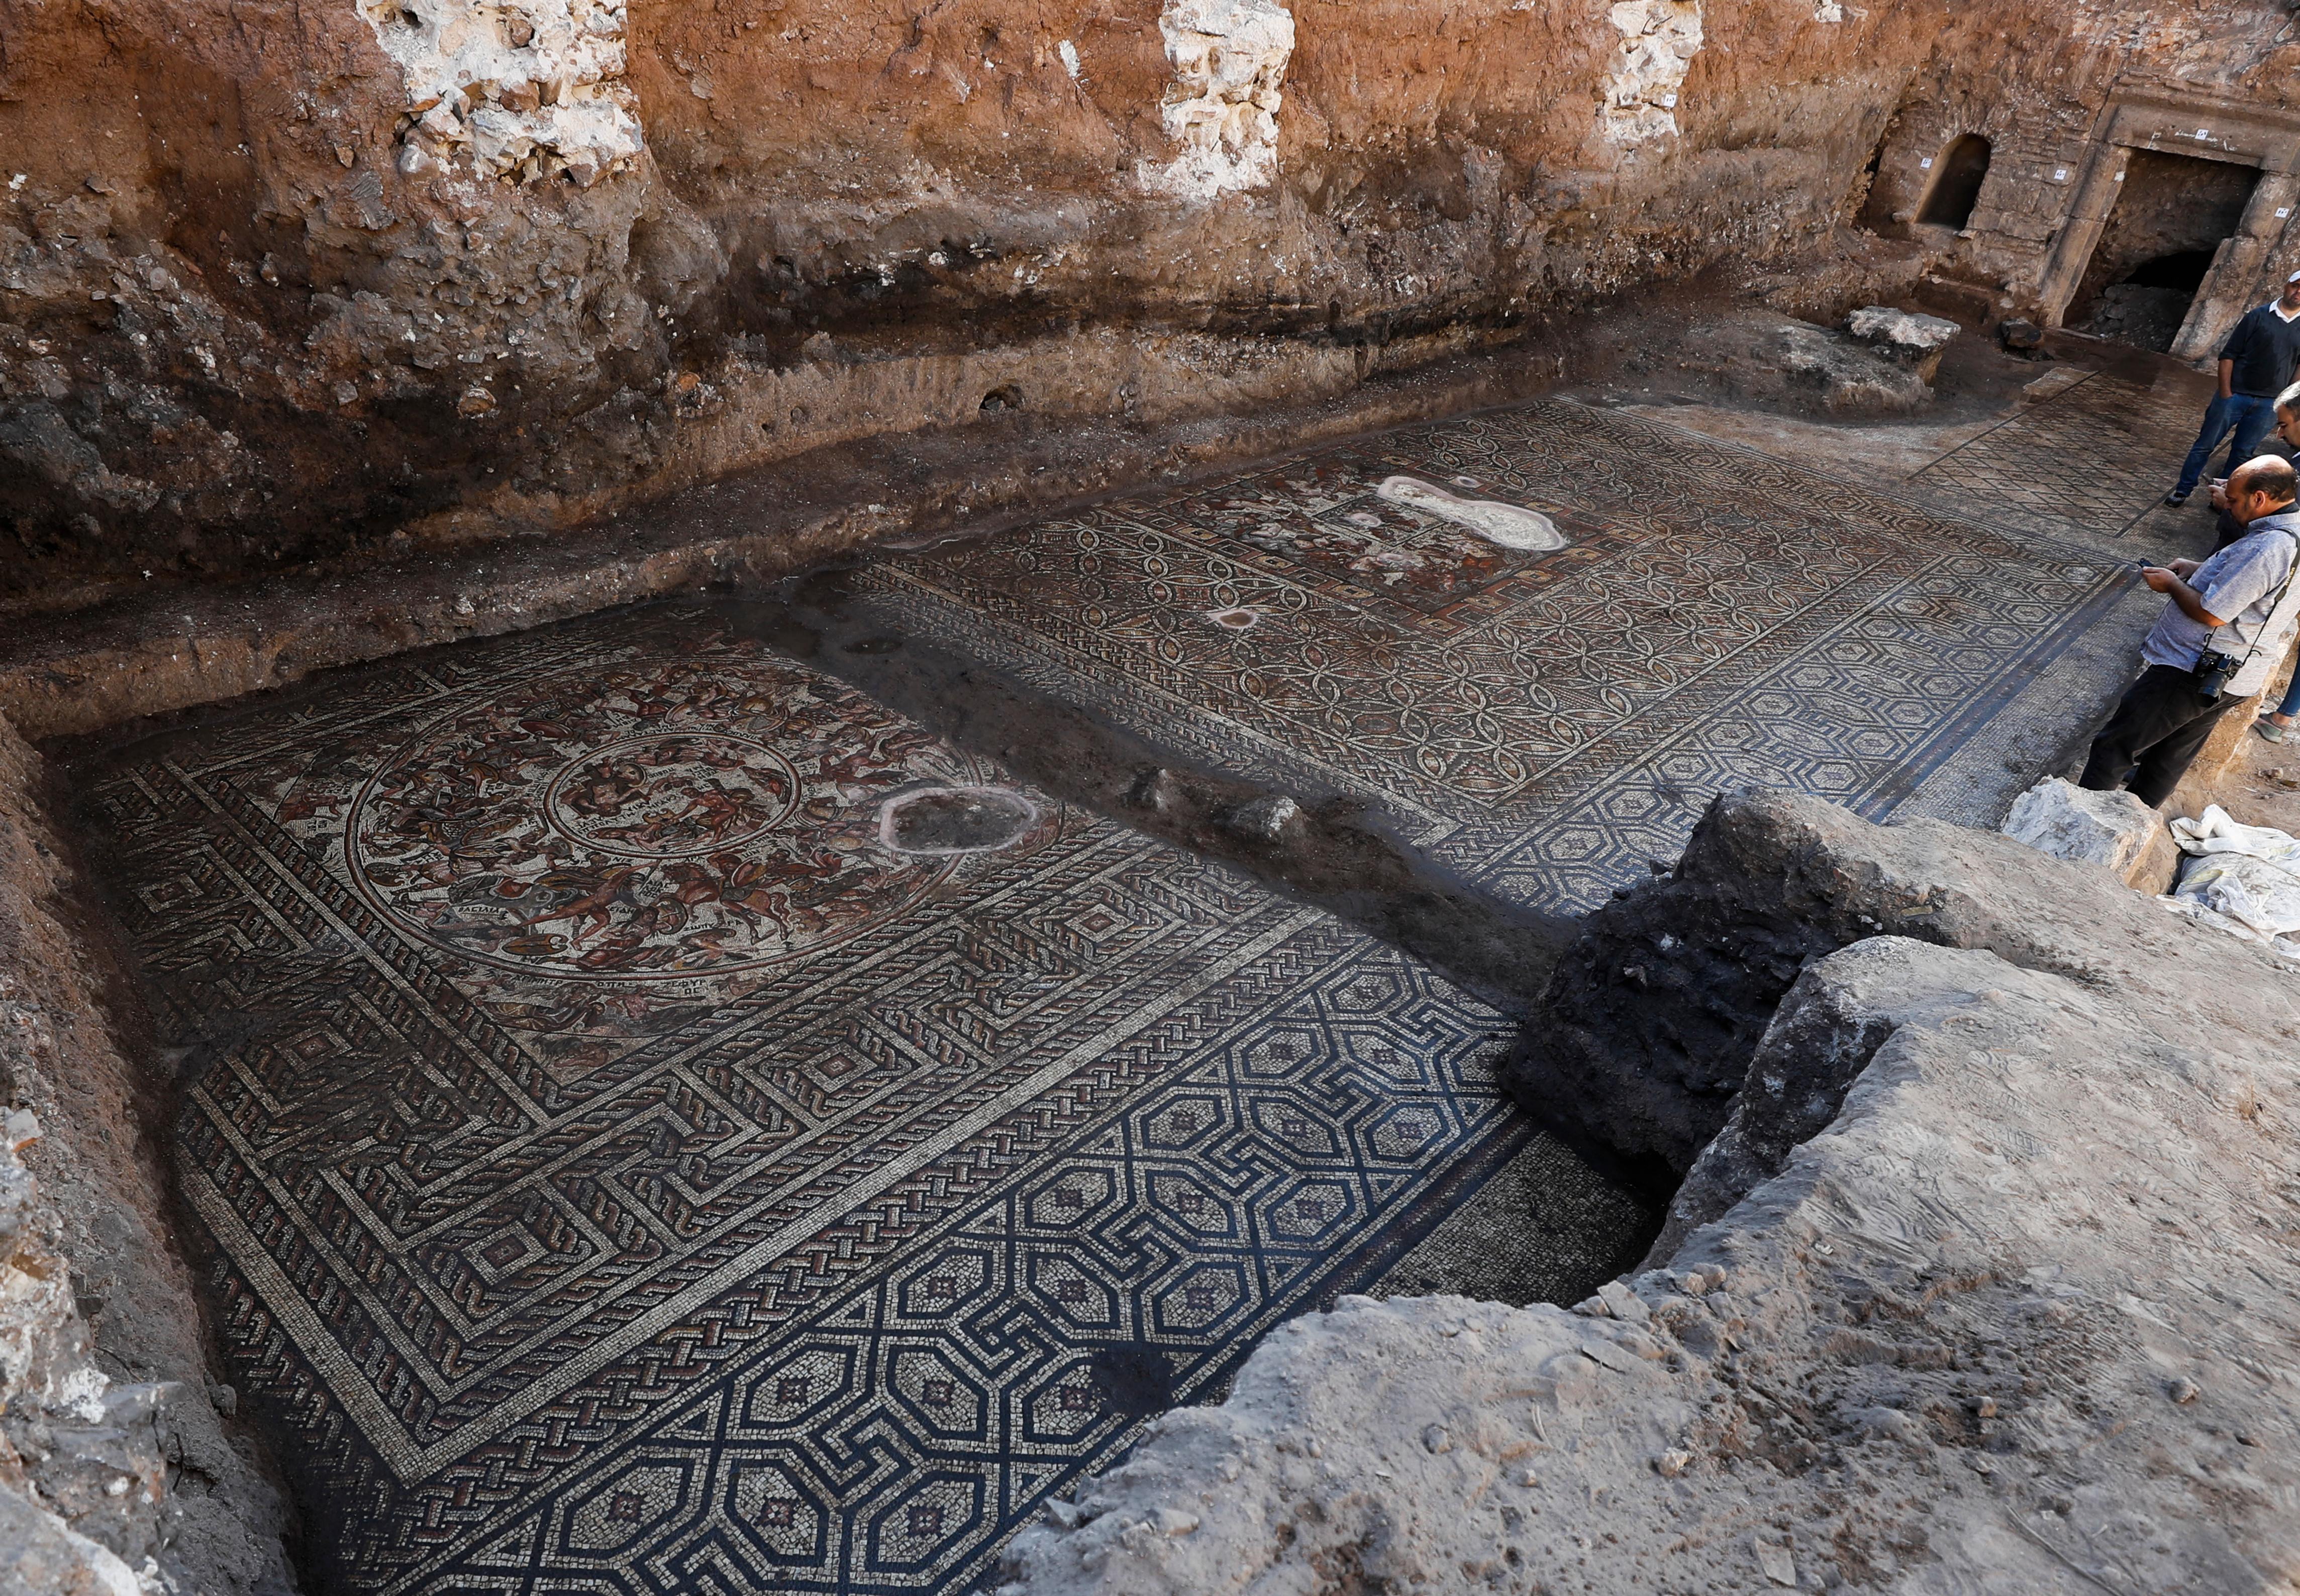 Syria digs up 'rare' mosaic dating back to Roman era